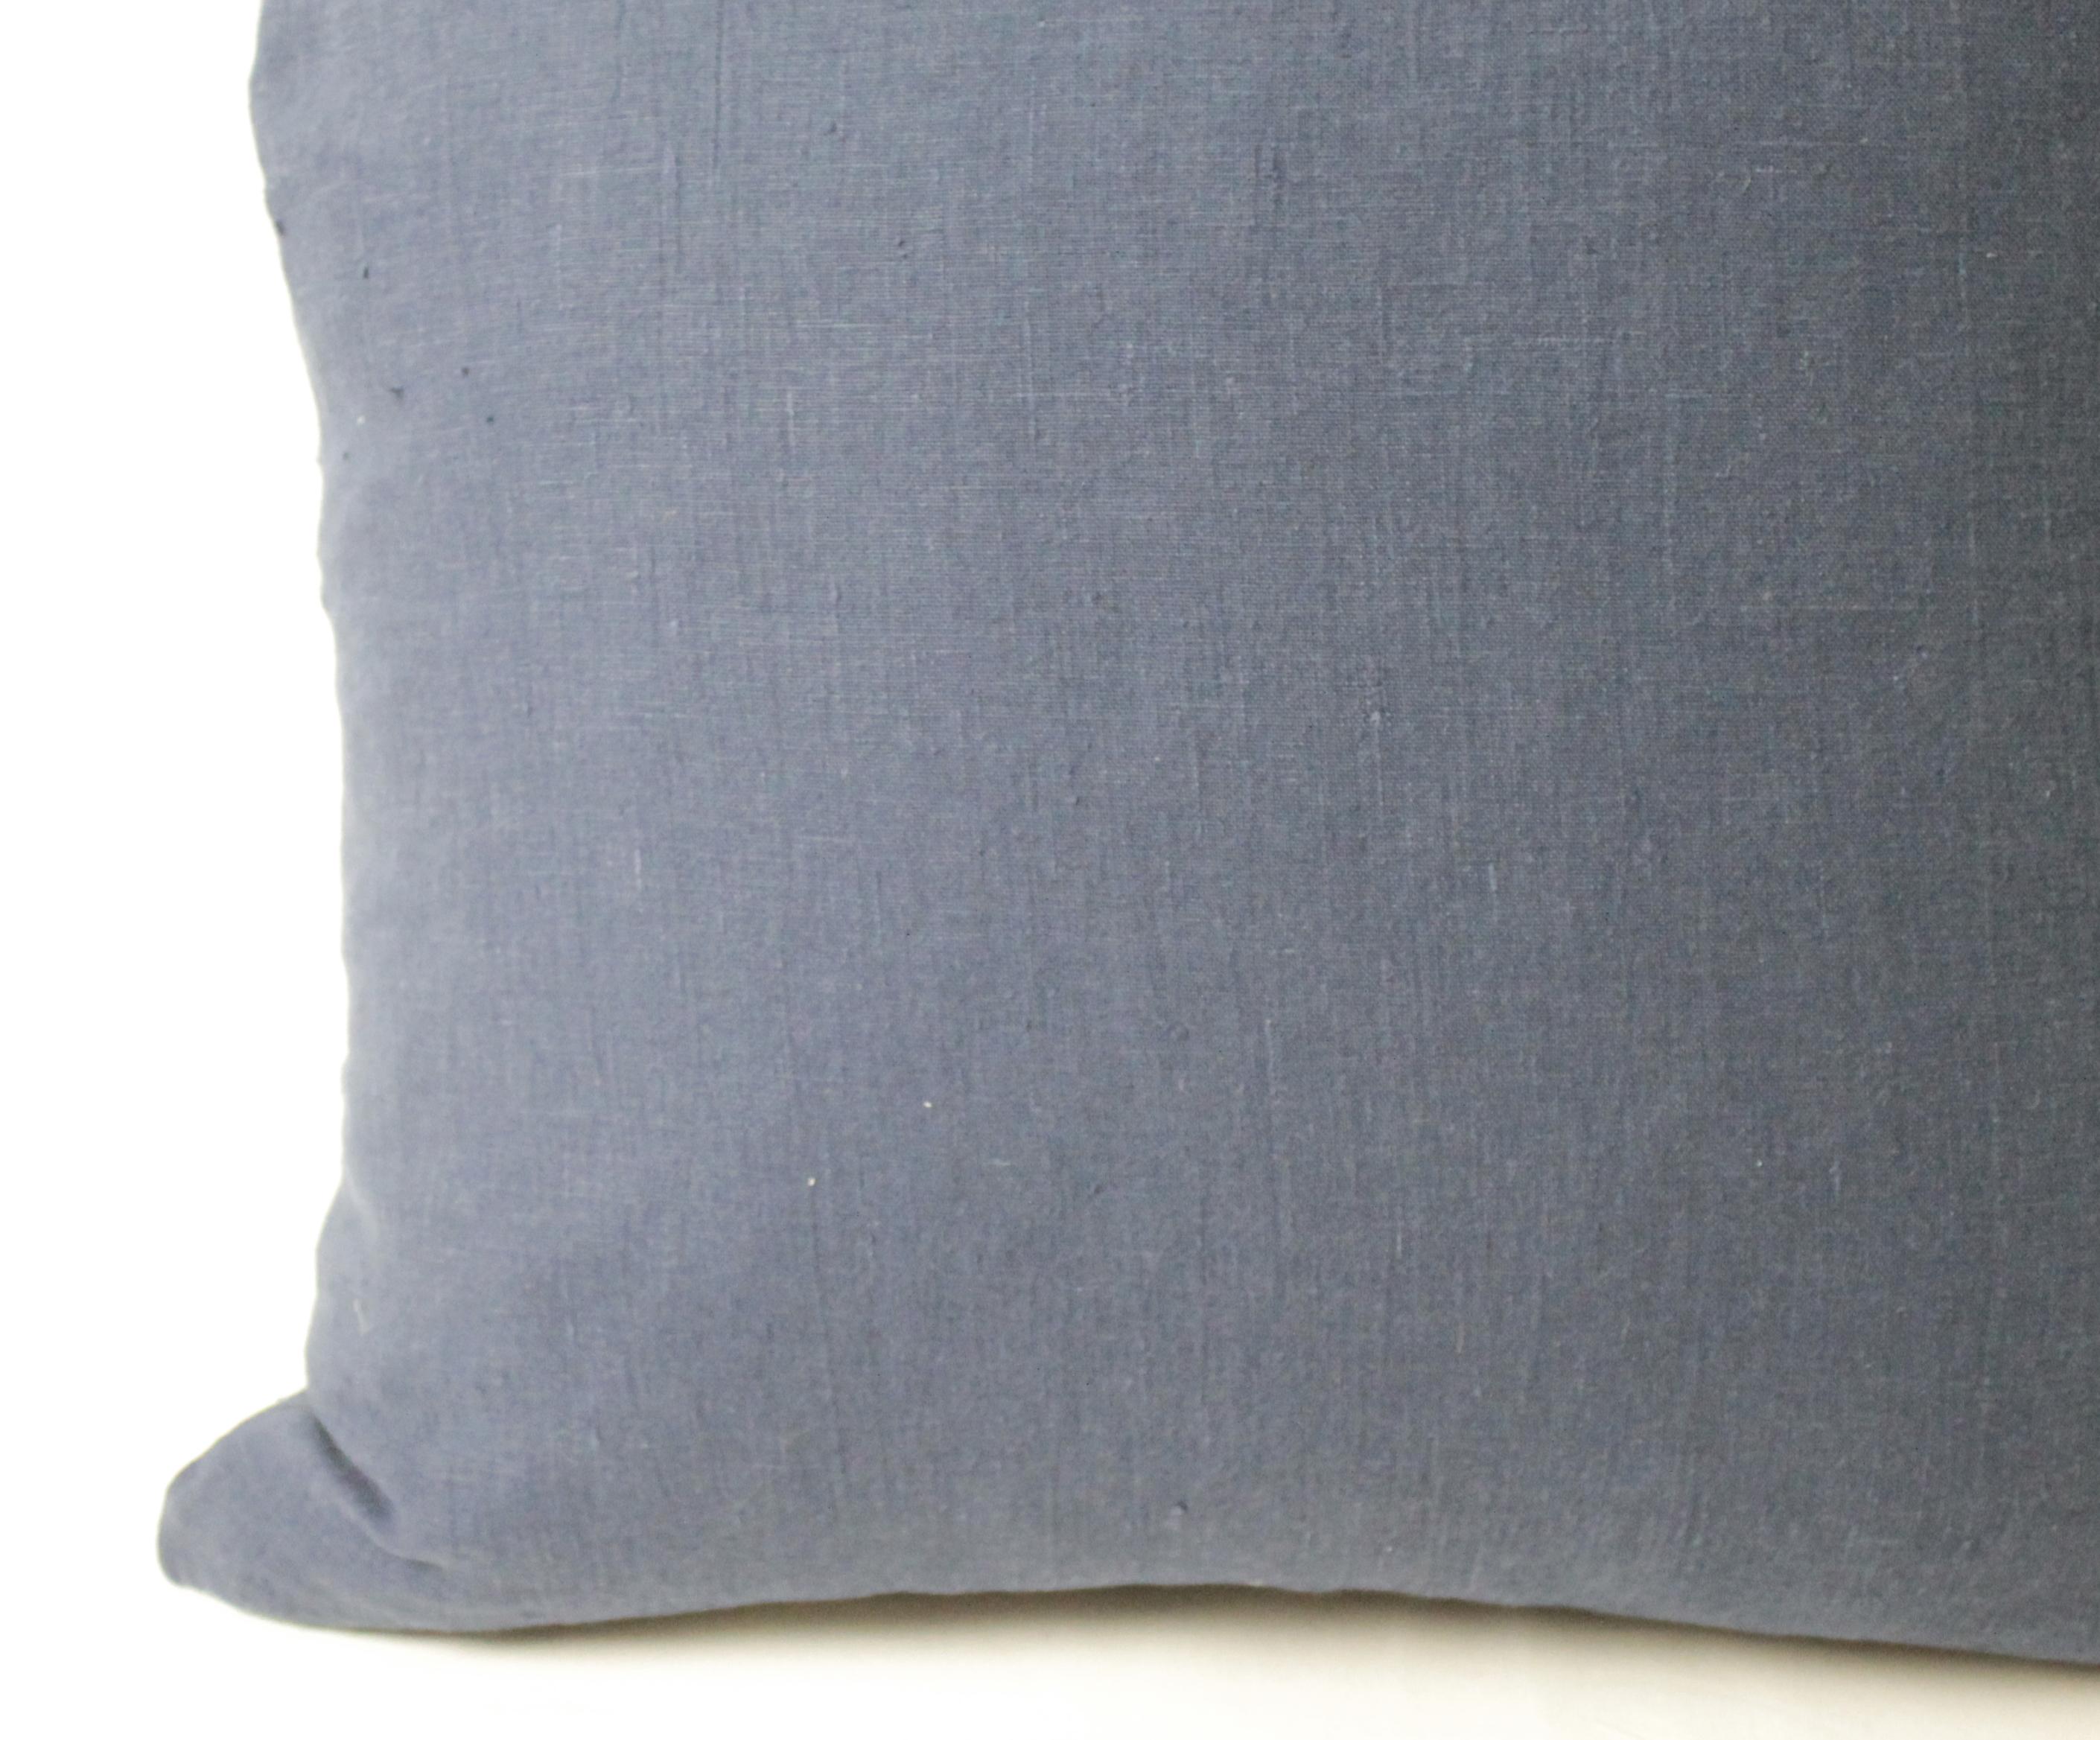 Antique Indigo Blue and White Batik Accent Pillow 6